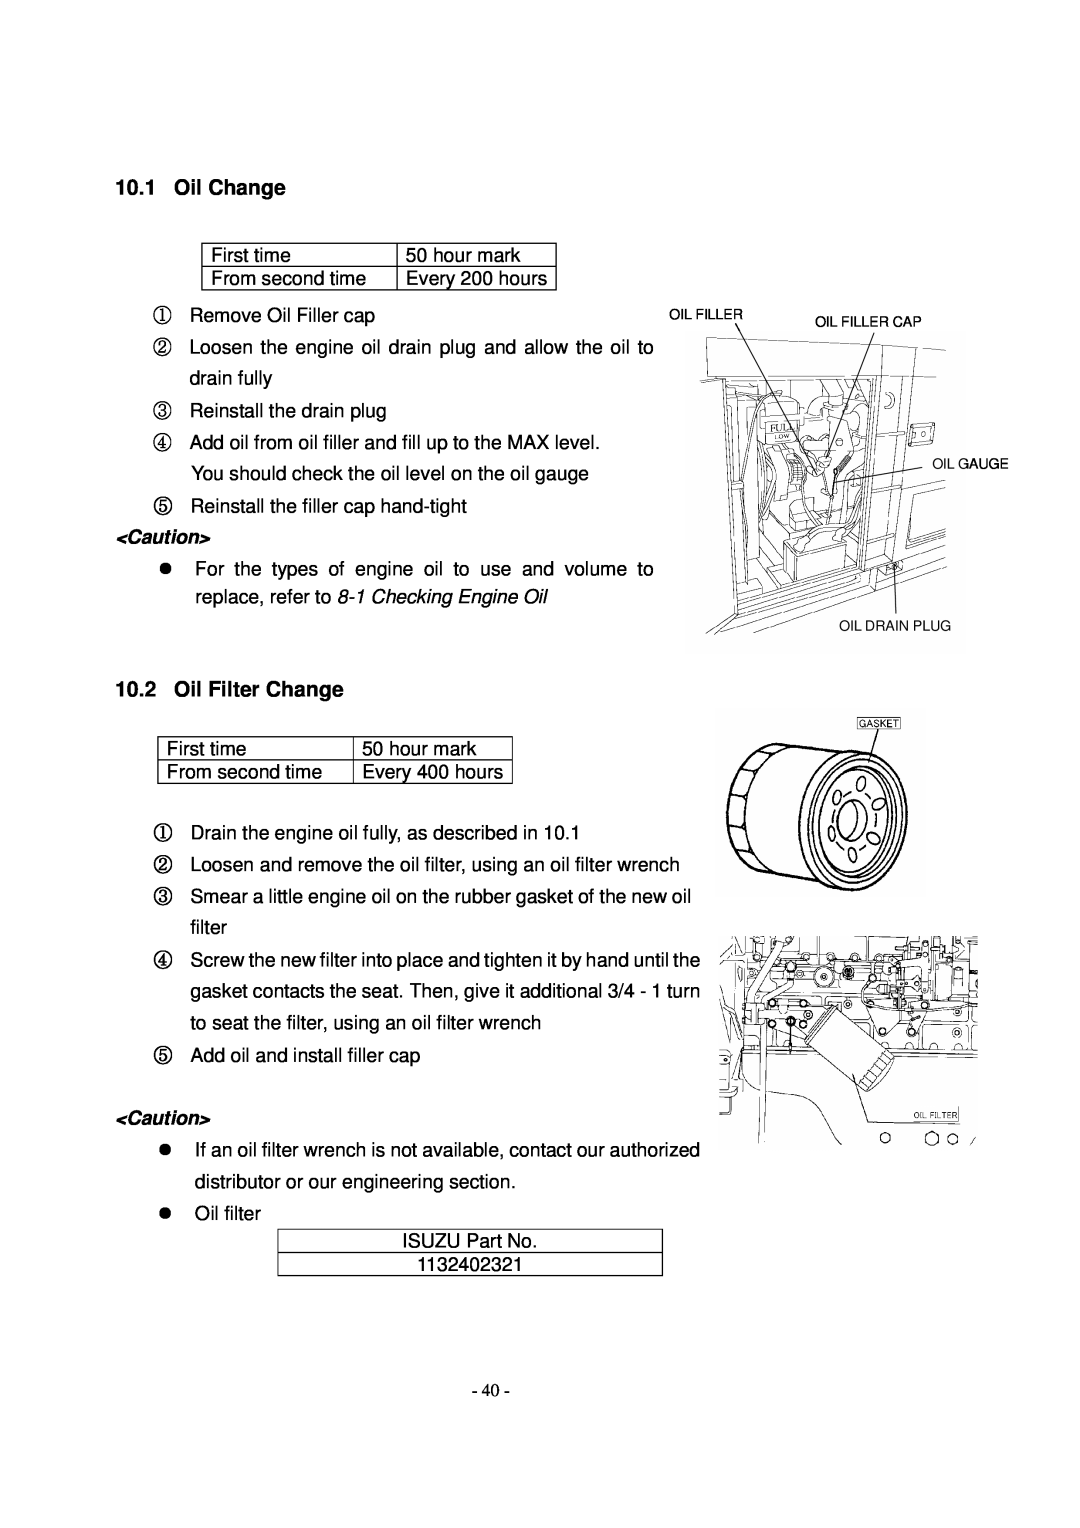 Shindaiwa DG1000MI manual 10.1, Oil Change, replace, refer to 8-1 Checking Engine Oil 